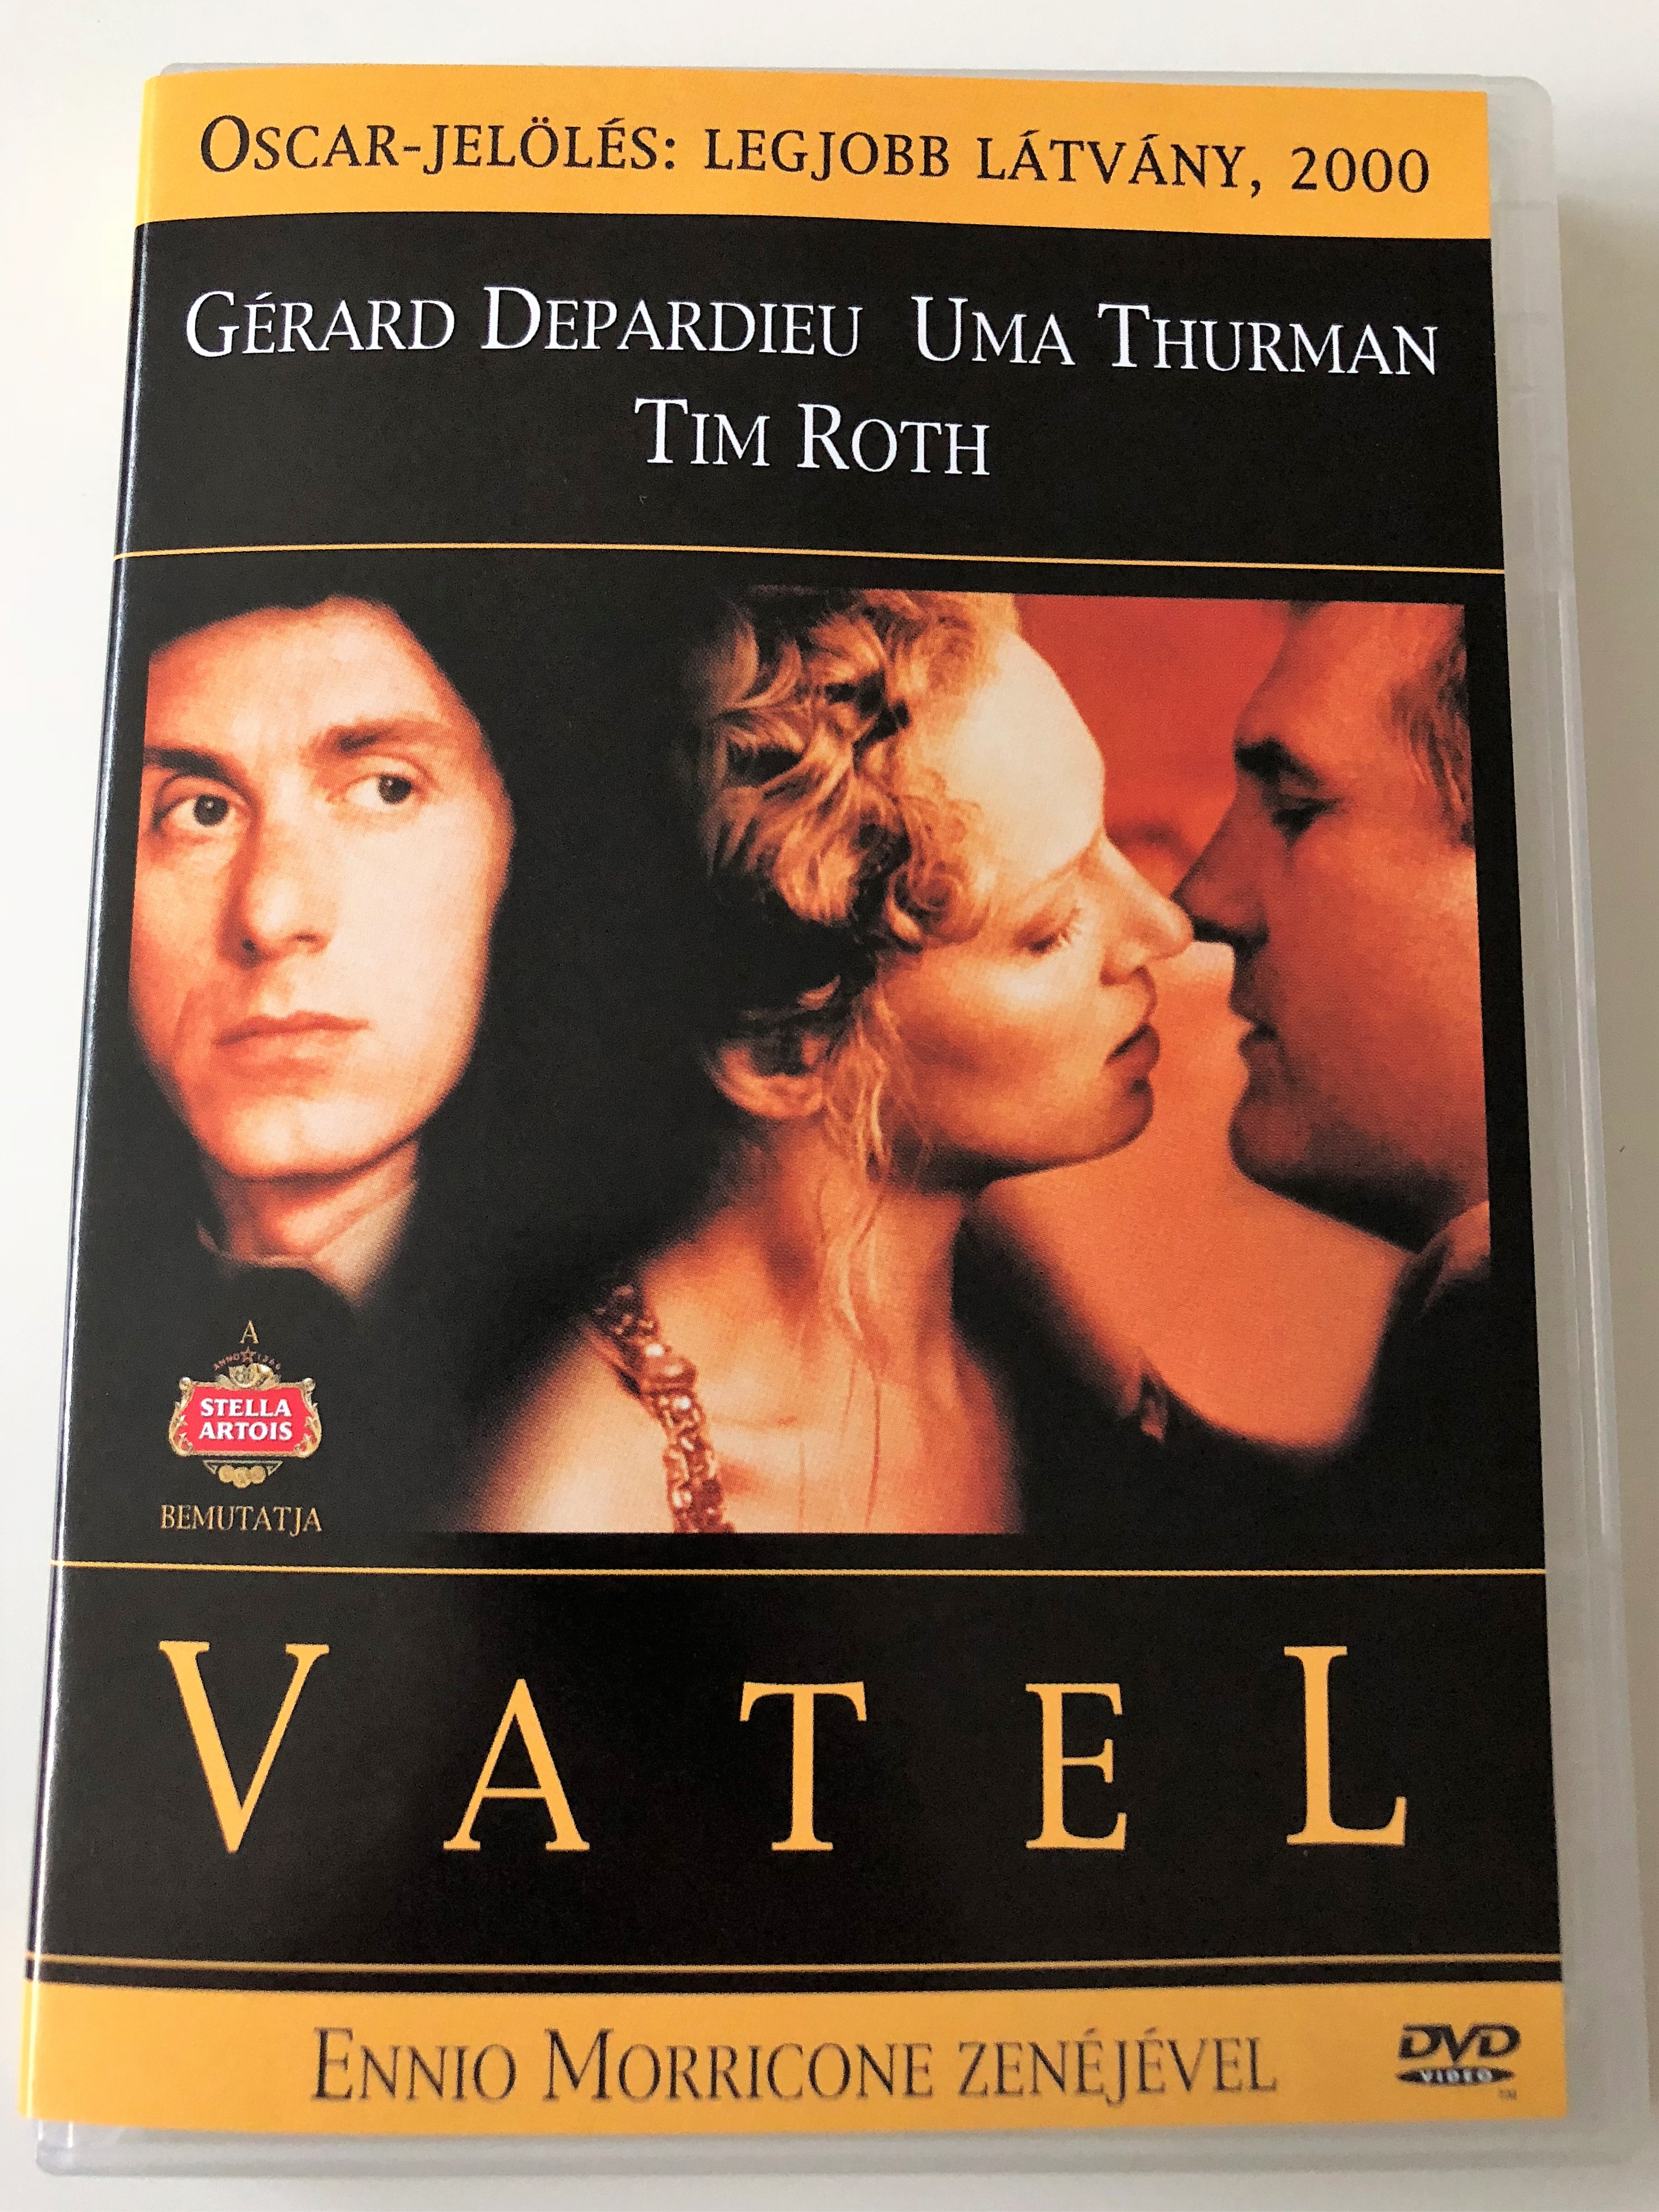 vatel-dvd-2000-directed-by-roland-joff-starring-g-rard-depardieu-uma-thurman-tim-roth-music-by-ennio-morricone-oscar-nominee-2000-.jpg